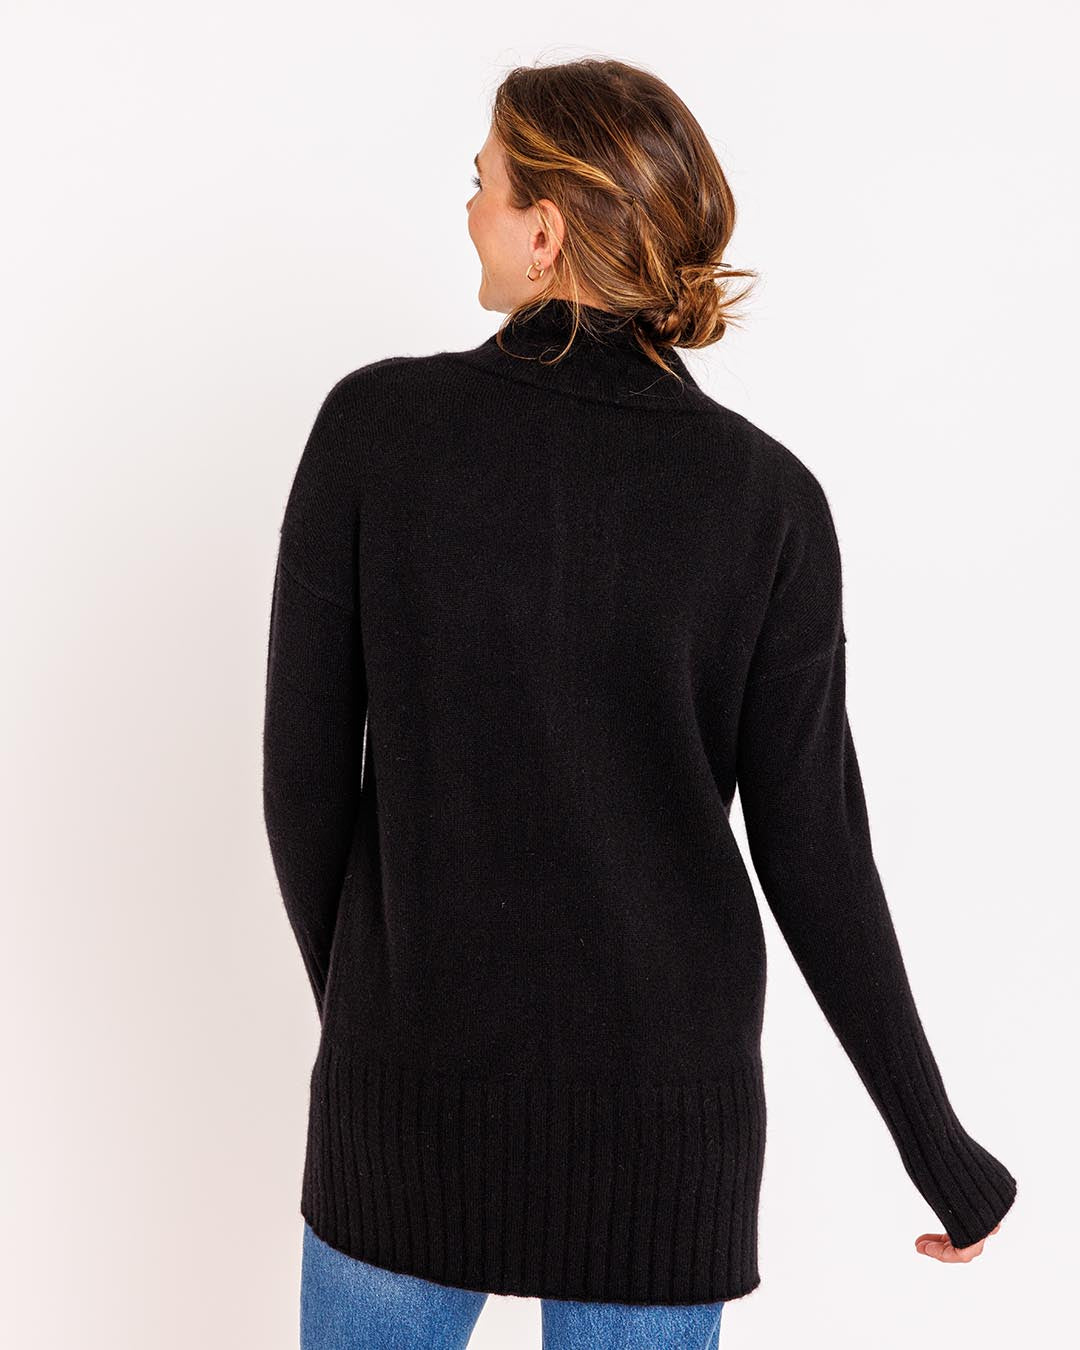 Women's Half Turtleneck Cashmere Sweater, 100% Cashmere Content